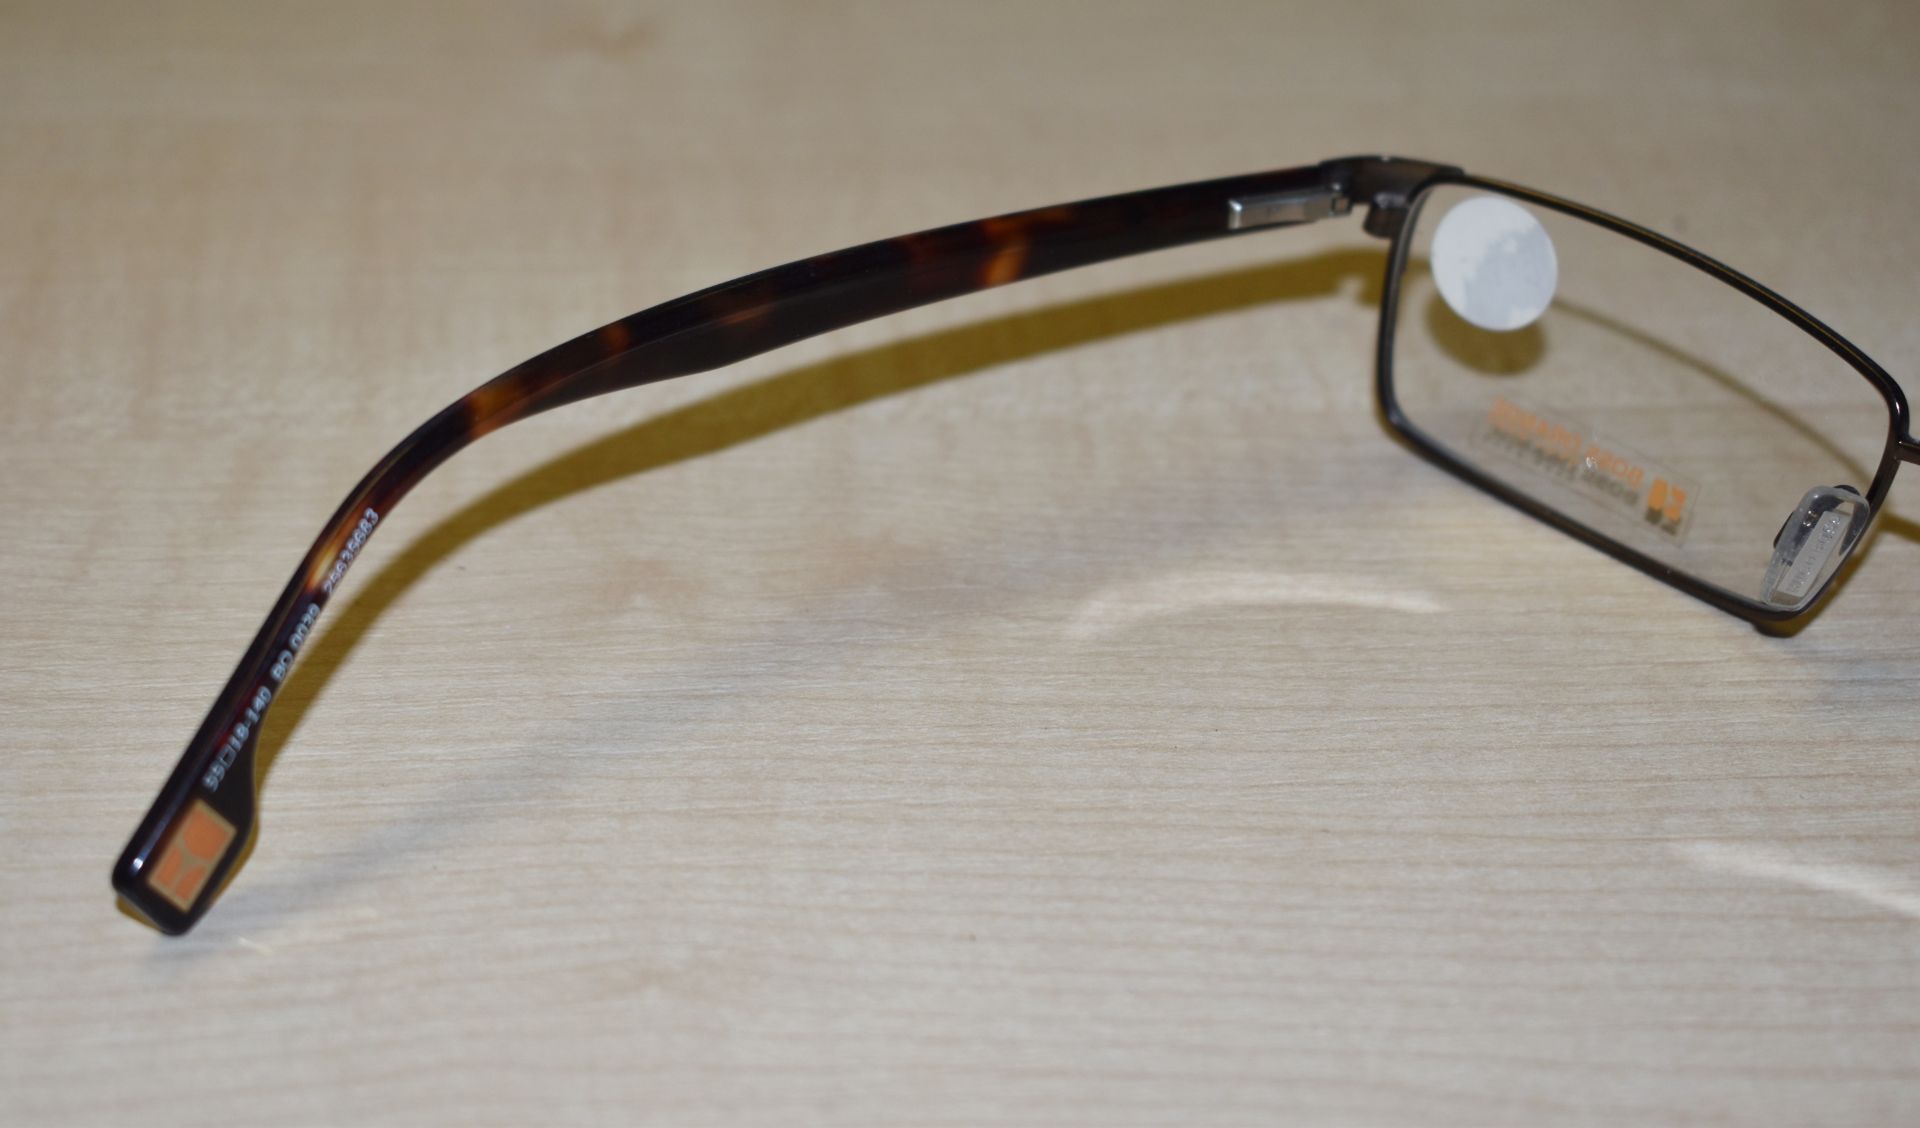 1 x Genuine BOSS ORANGE Spectacle Eye Glasses Frame - Ex Display Stock  - Ref: GTI193 - CL645 - - Image 11 of 11